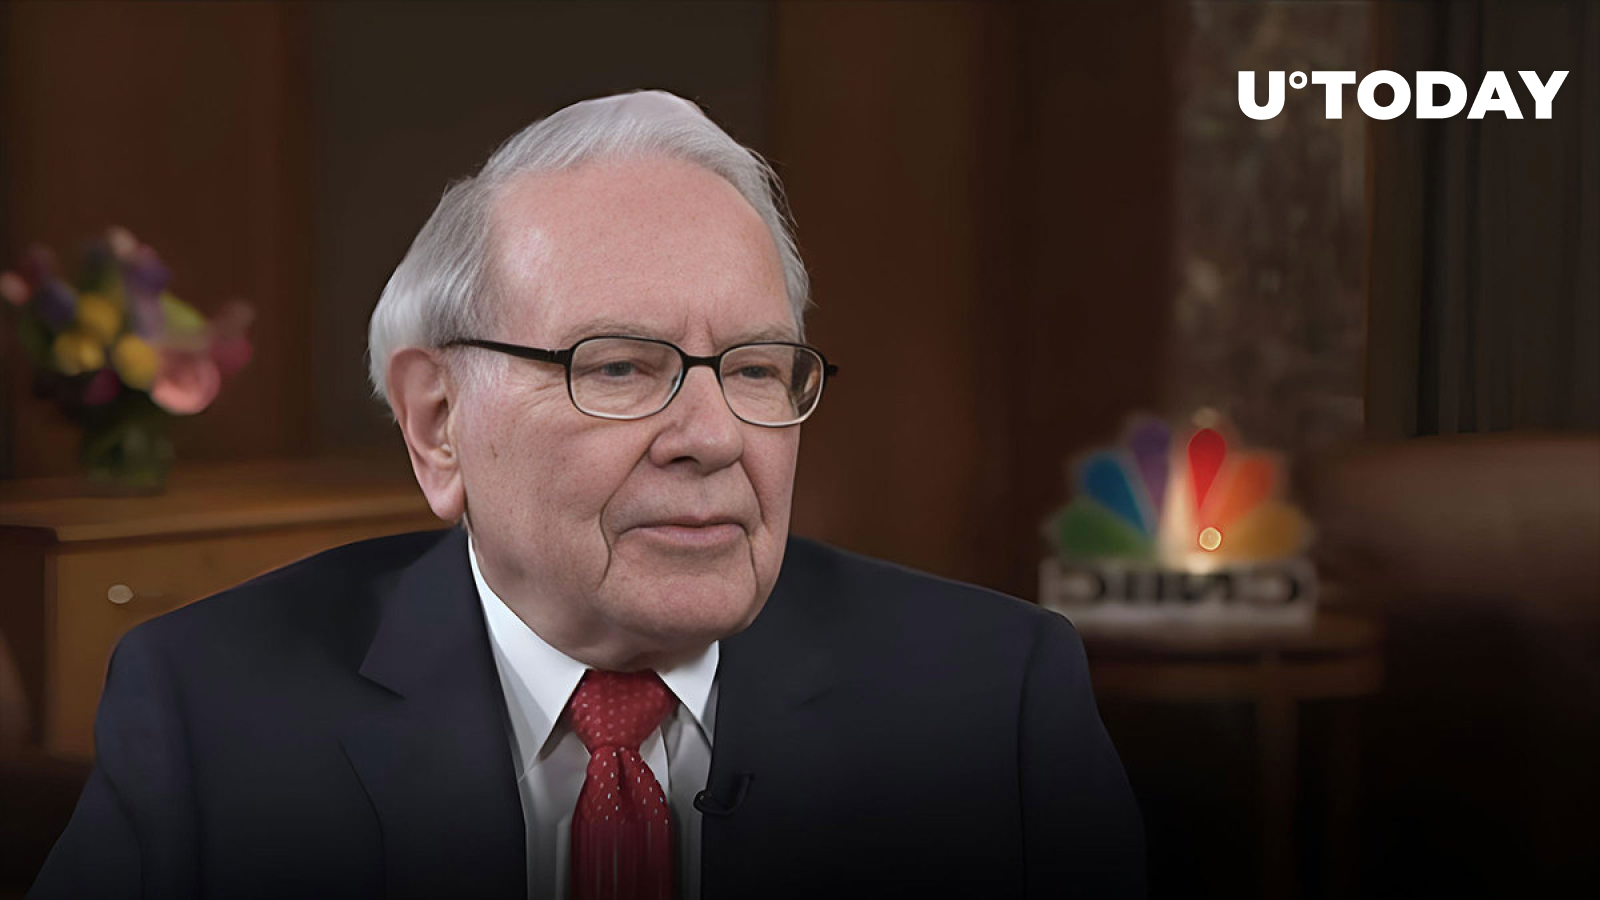 Bitcoin critic Warren Buffett may surprisingly lose his chairman position at Berkshire Hathaway